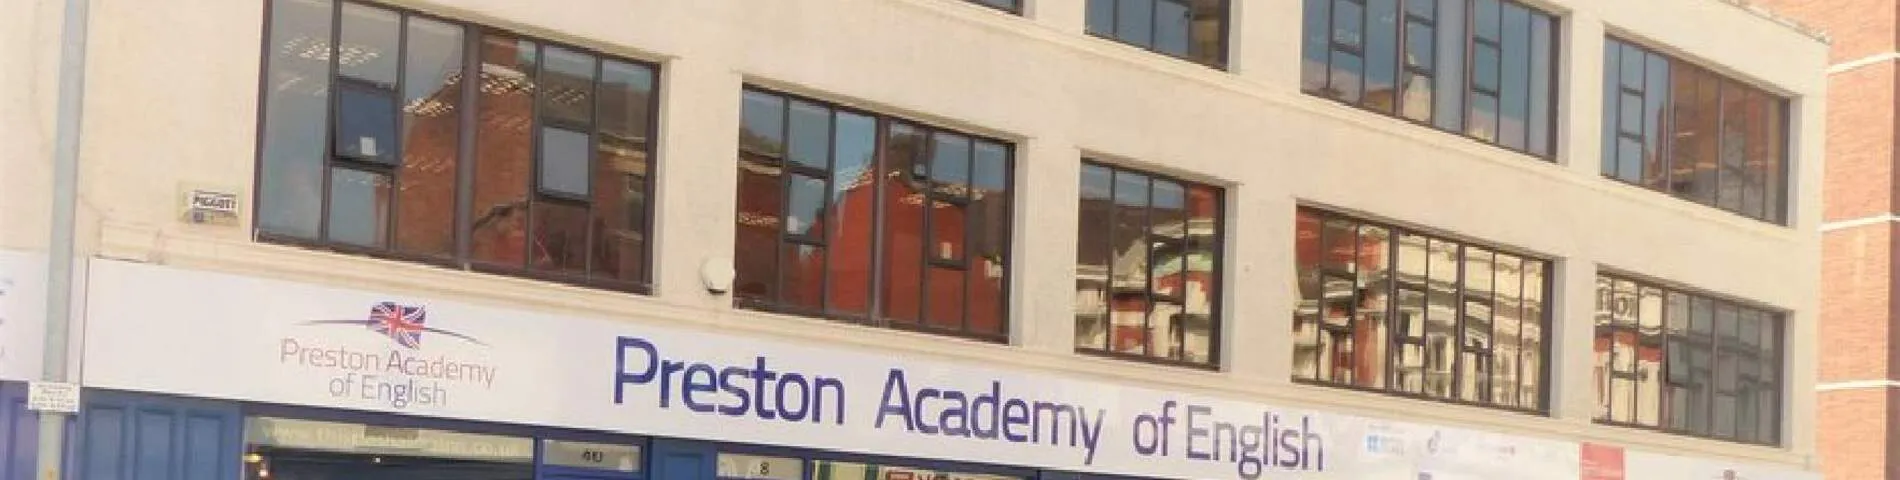 Preston Academy of English resim 1